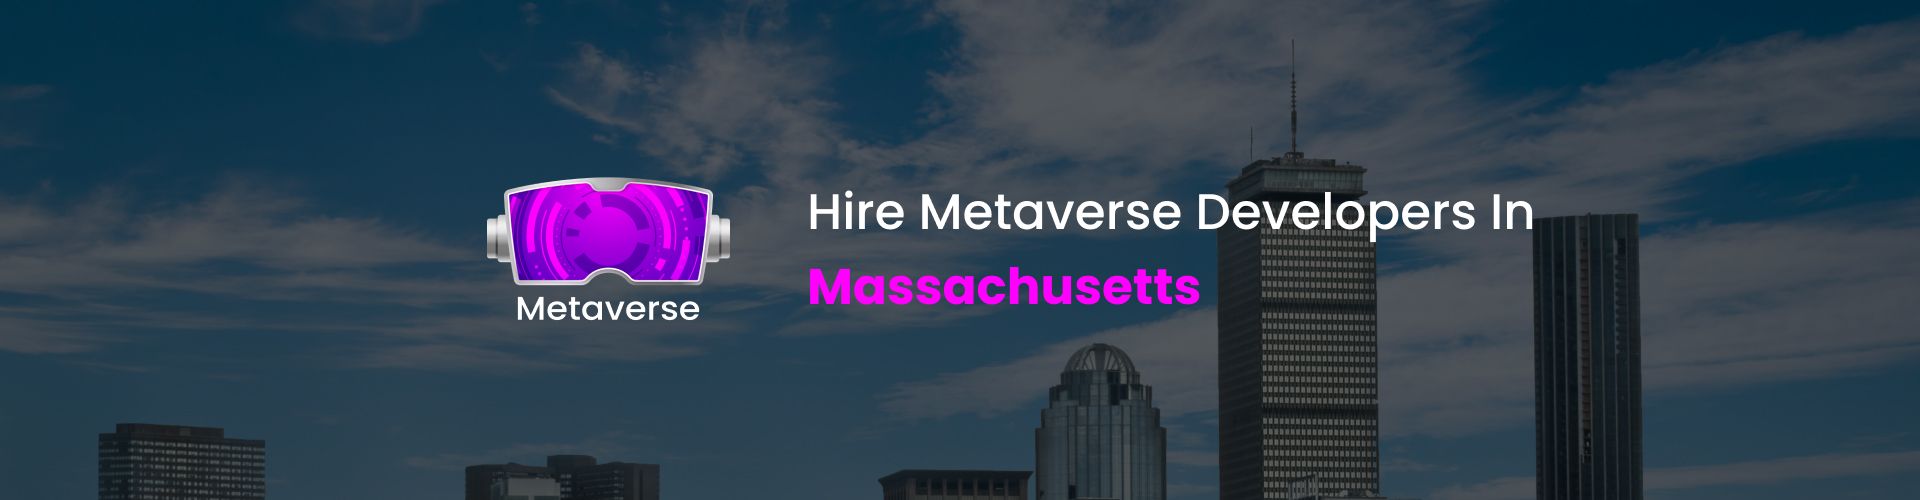 hire metaverse developers in massachusetts